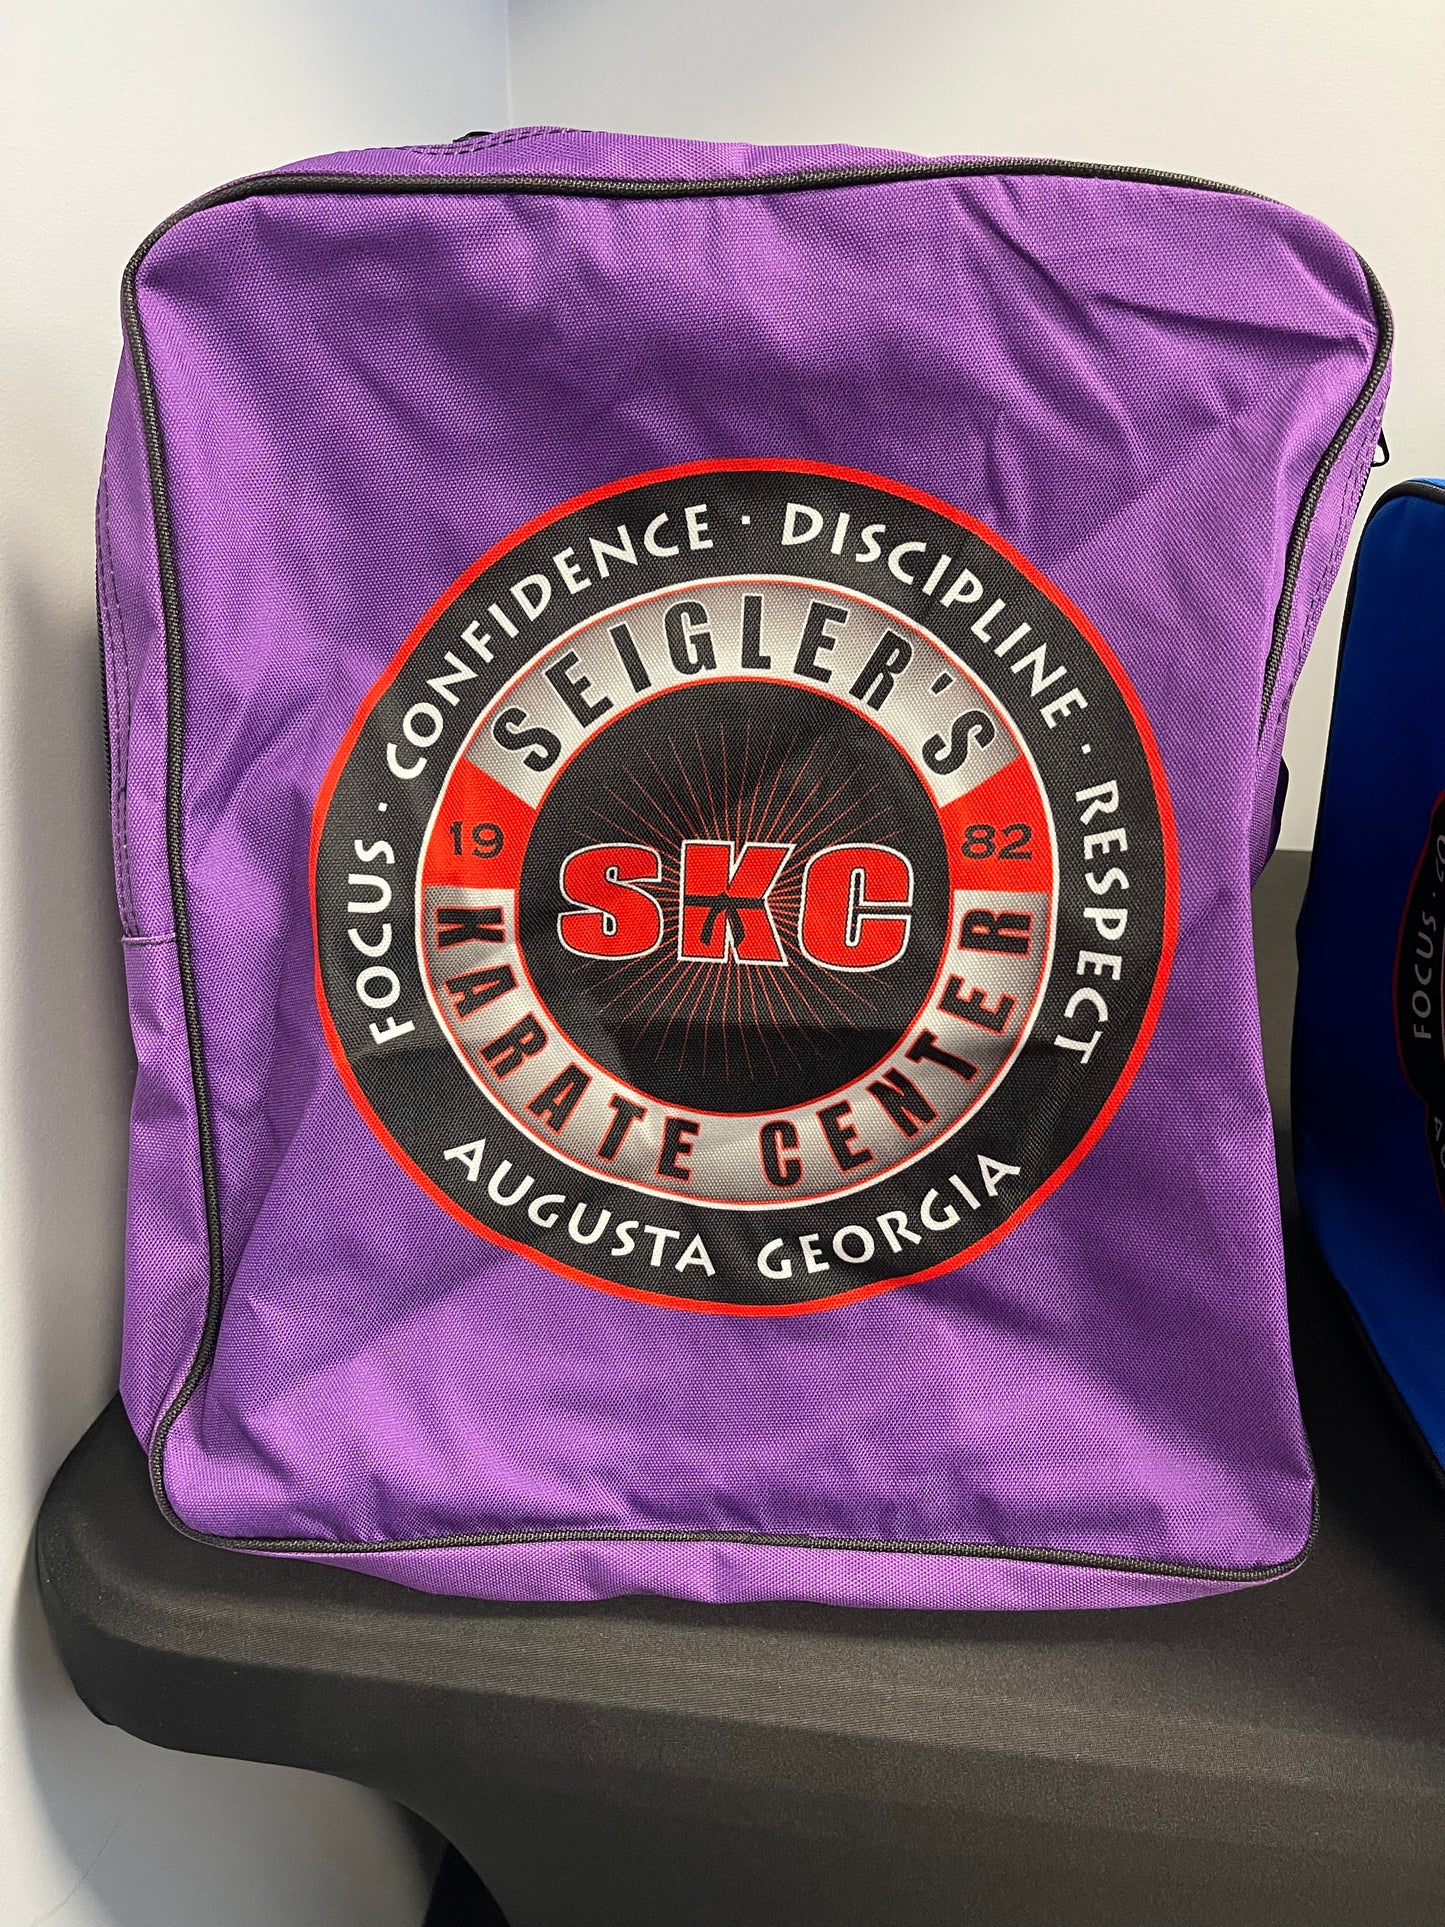 SKC Gear Bag